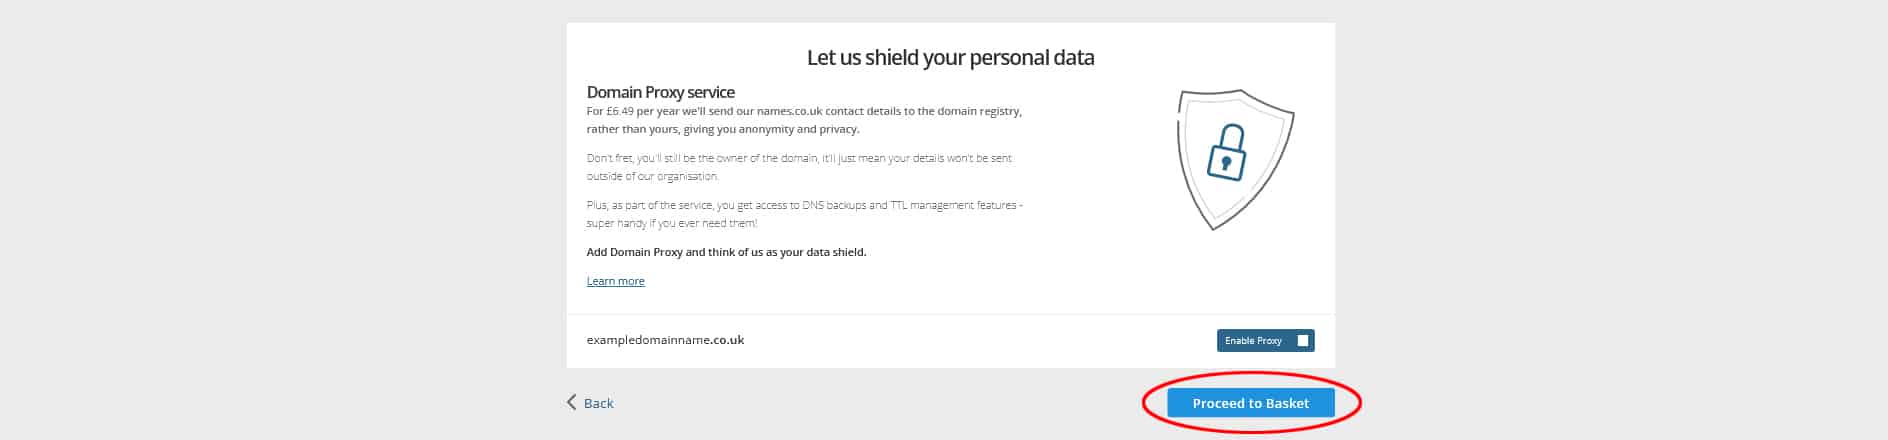 Sheild your personal data page - screenshot